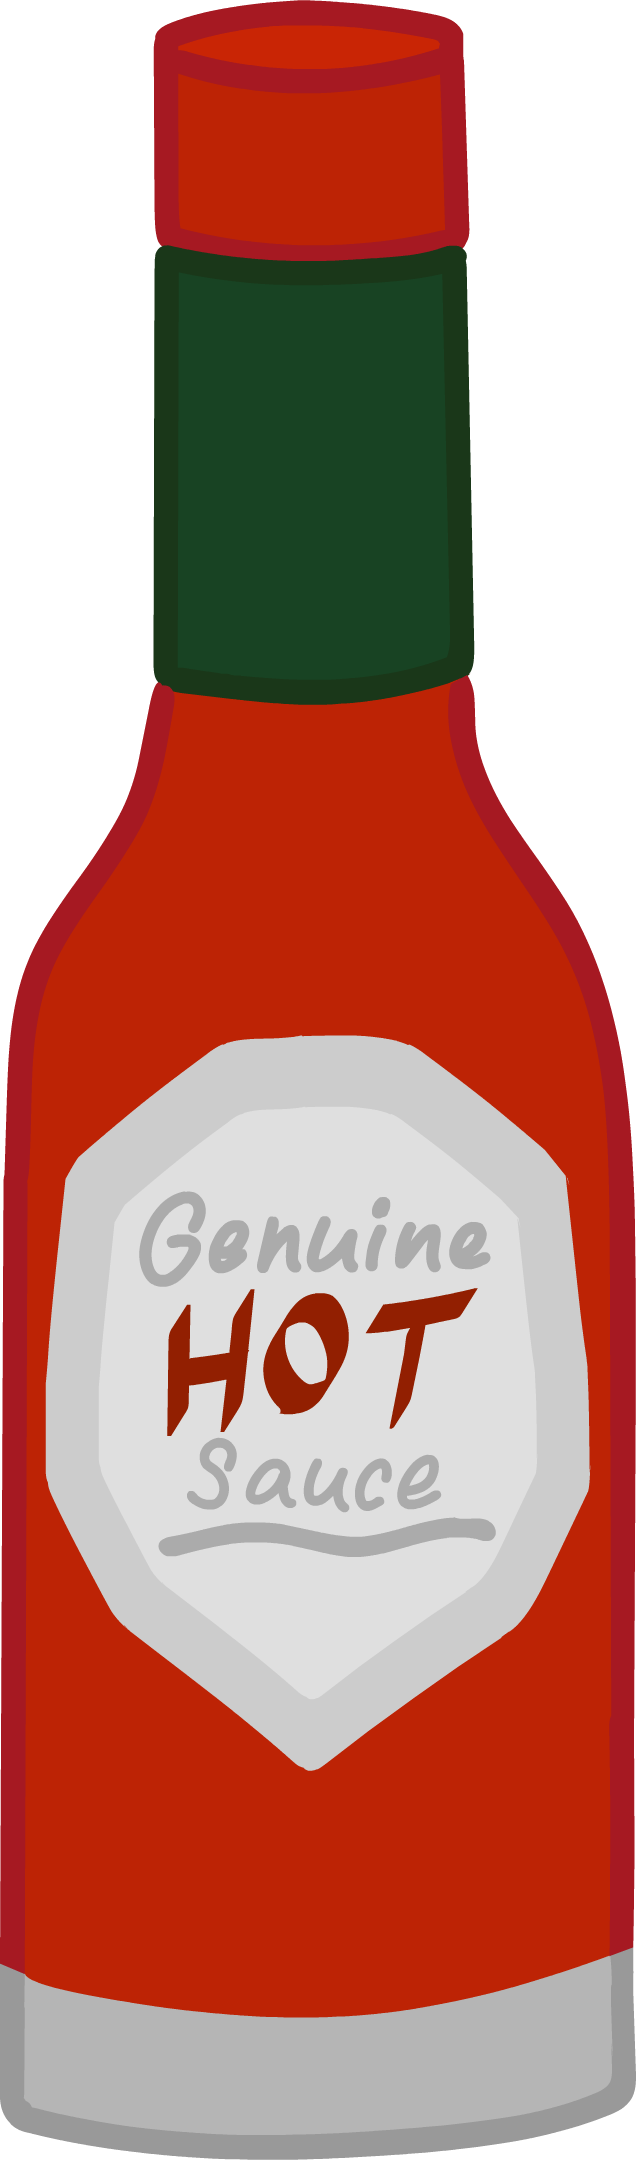 Hot Sauce.png - Hot Sauce Bottle, Transparent background PNG HD thumbnail